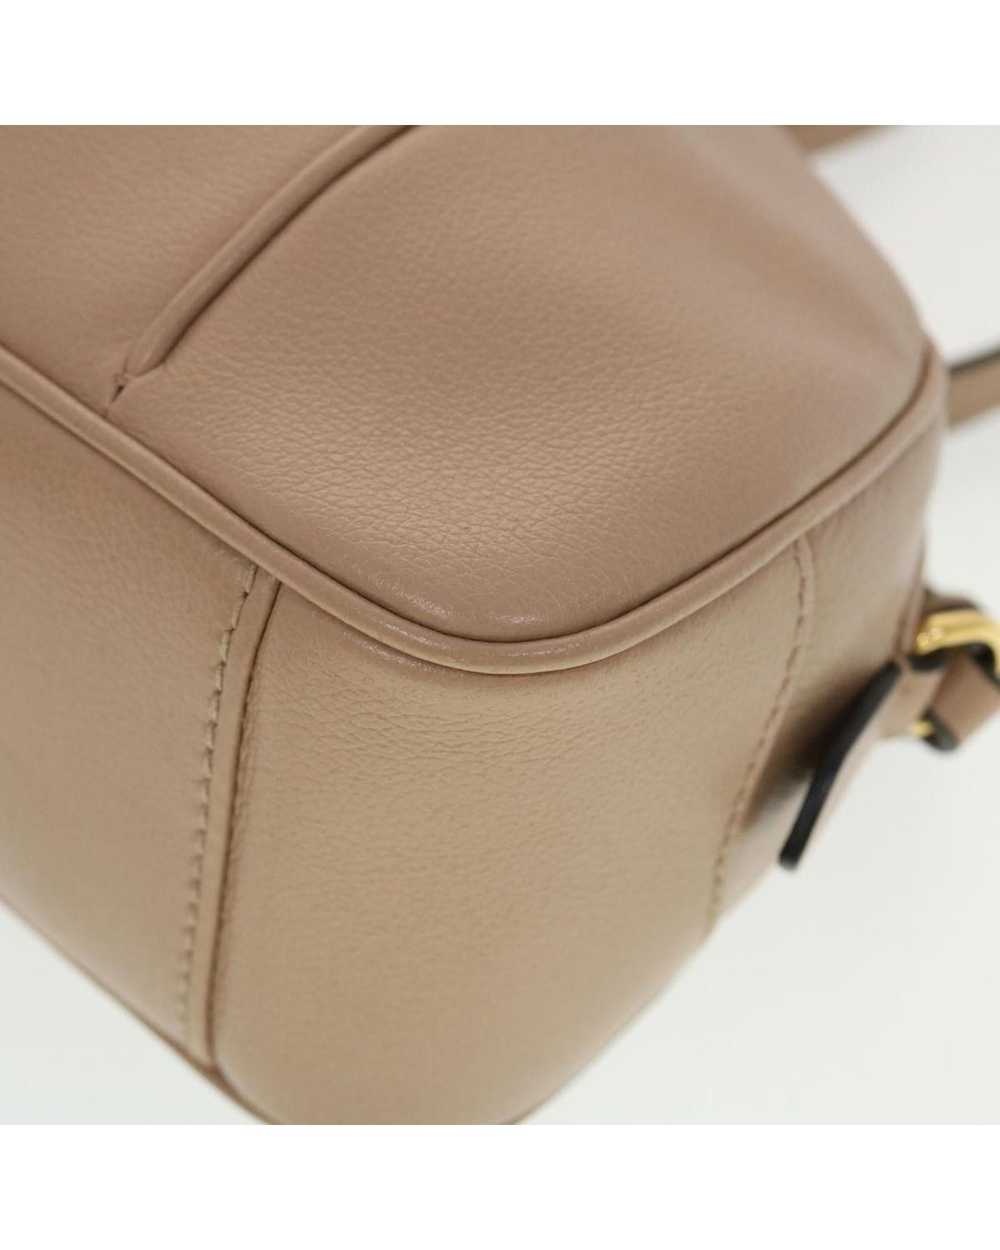 Miu Miu Chain Shoulder Bag Leather Beige Pink - image 8